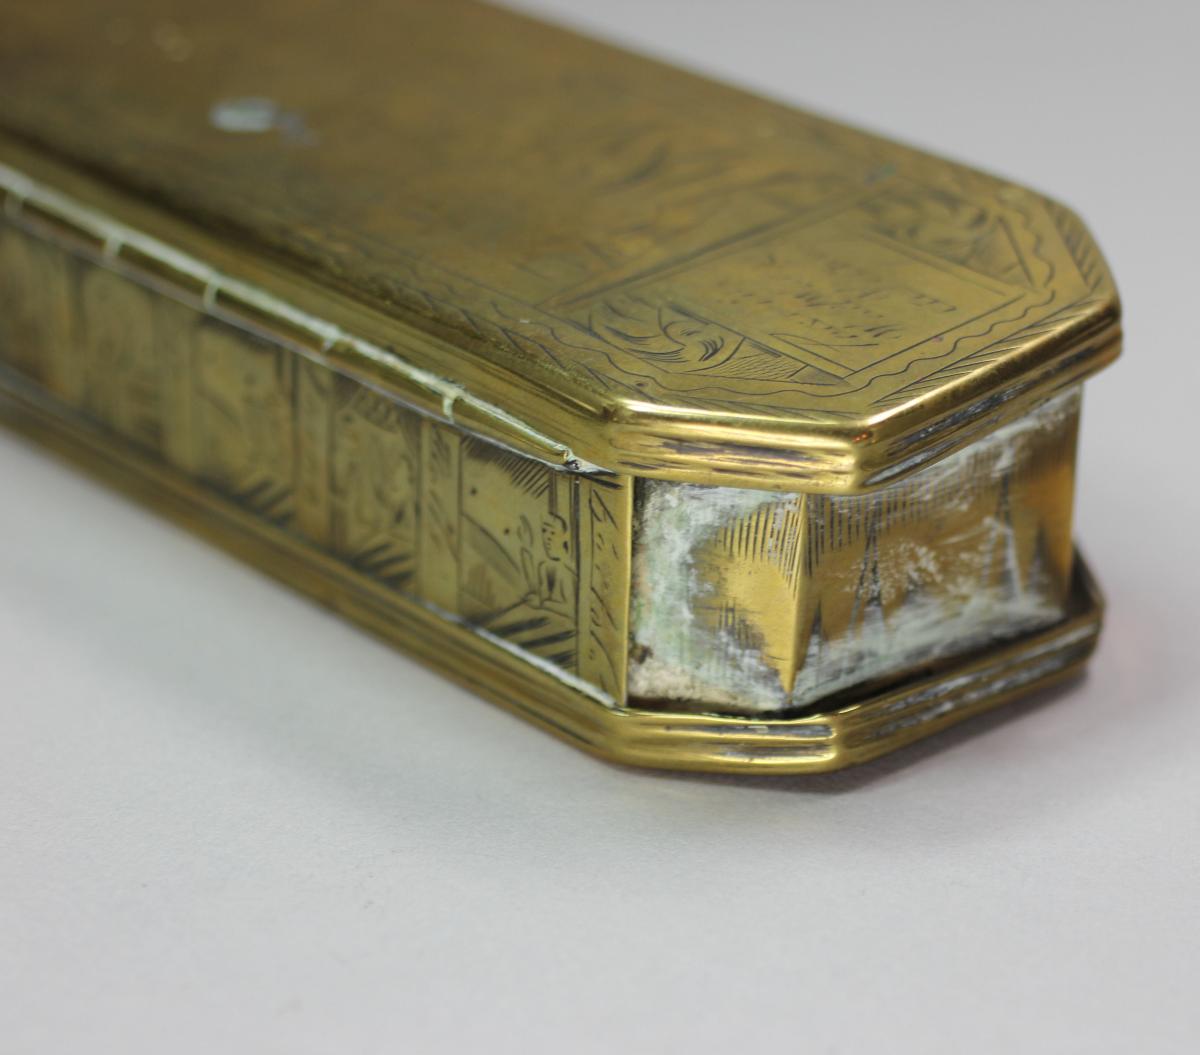 Dutch brass and copper octagonal tobacco box, 18th century